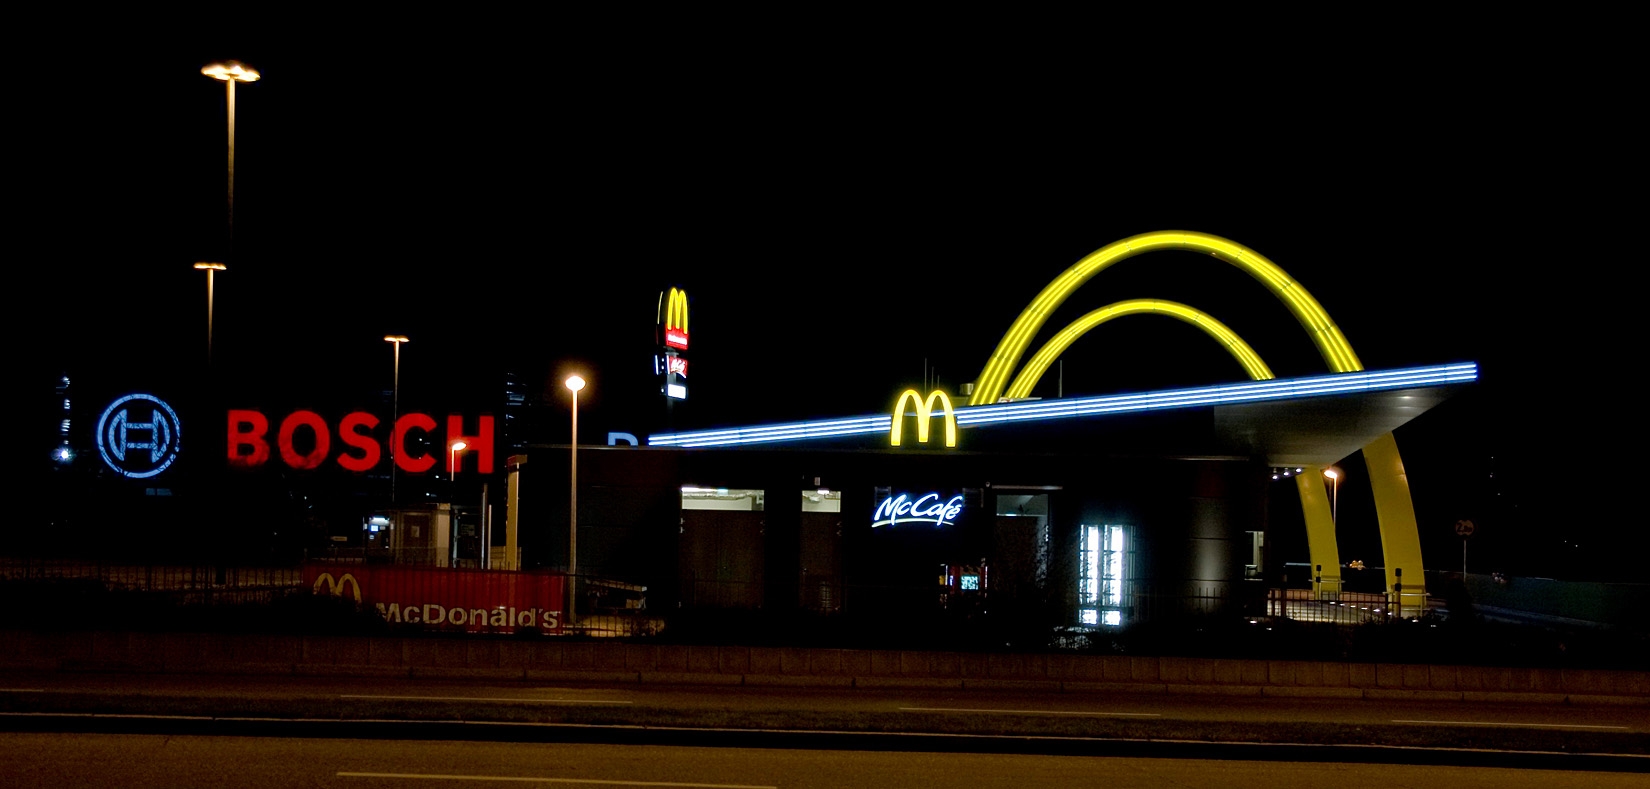 McDonalds (54)